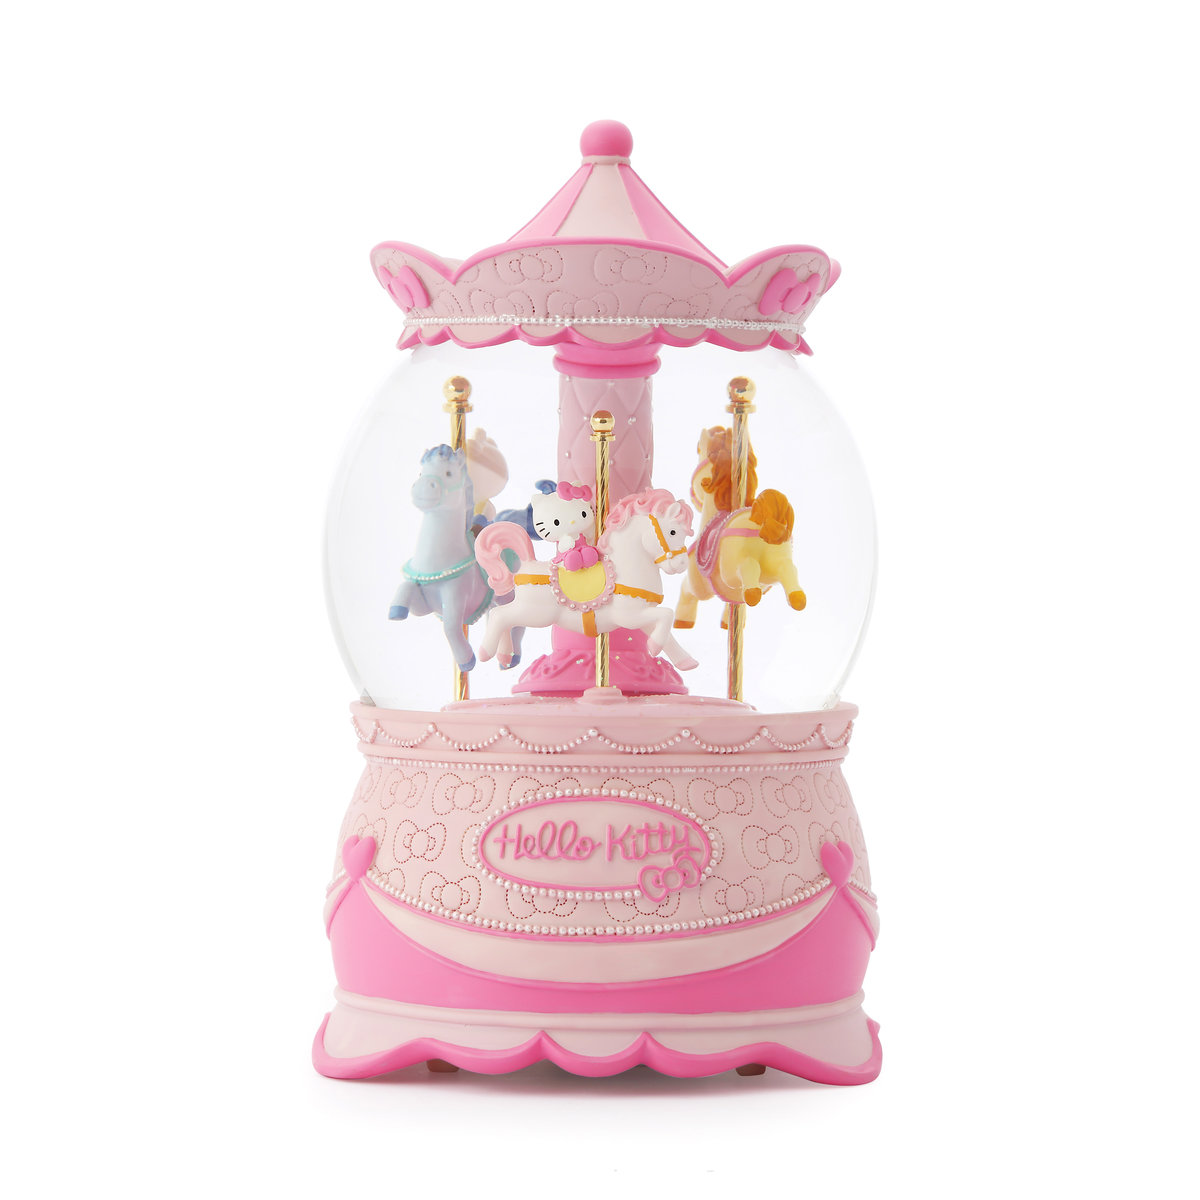 Tiffany & Co. Snow Globe Dome Merry-go-round V.I.P Limited Music Box